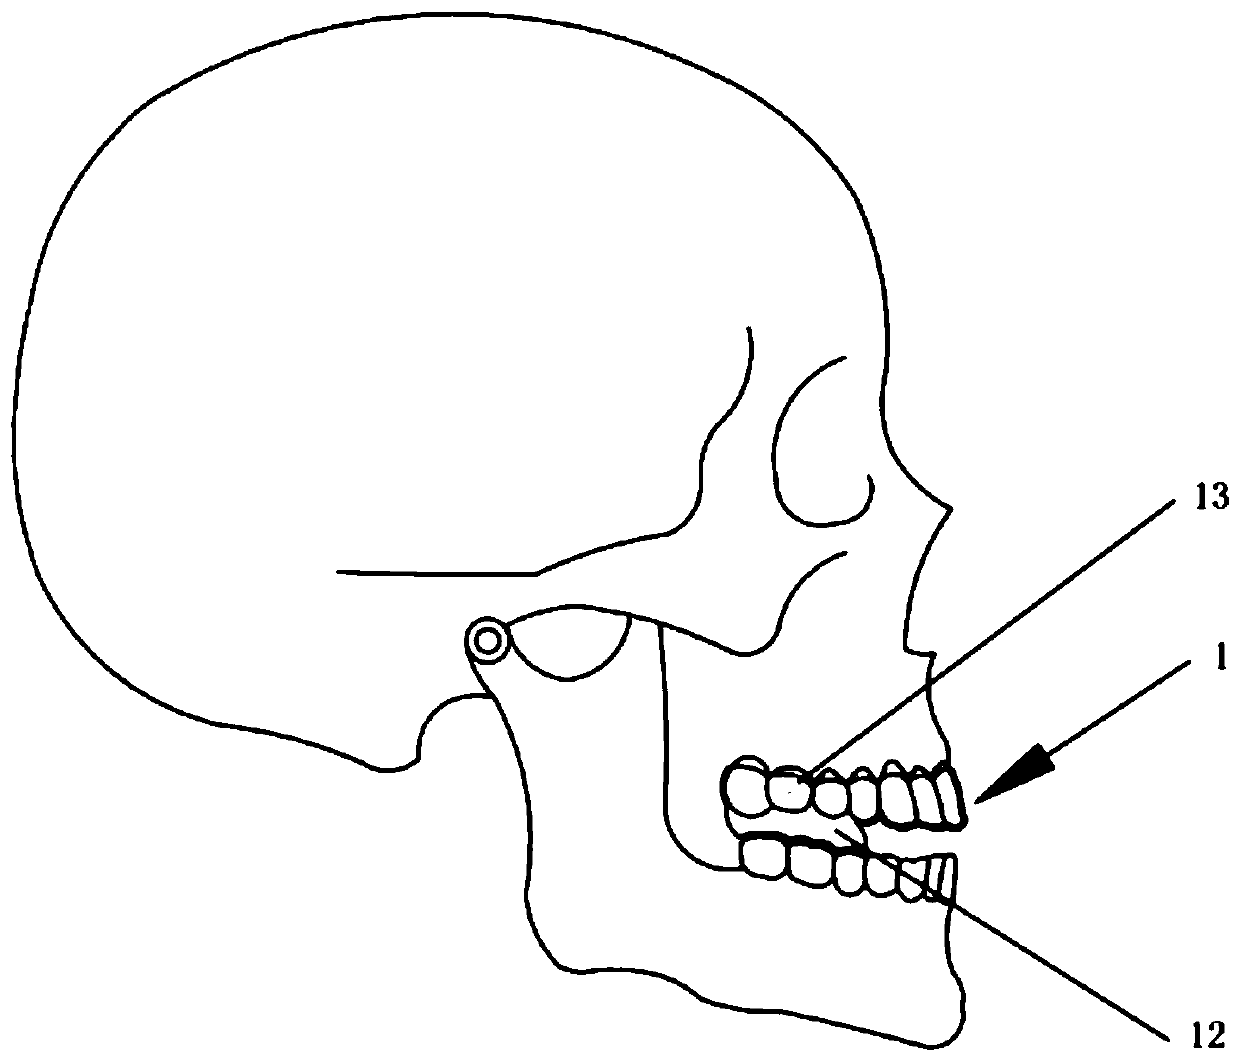 Dental-facial deformity orthopedics system and design method thereof